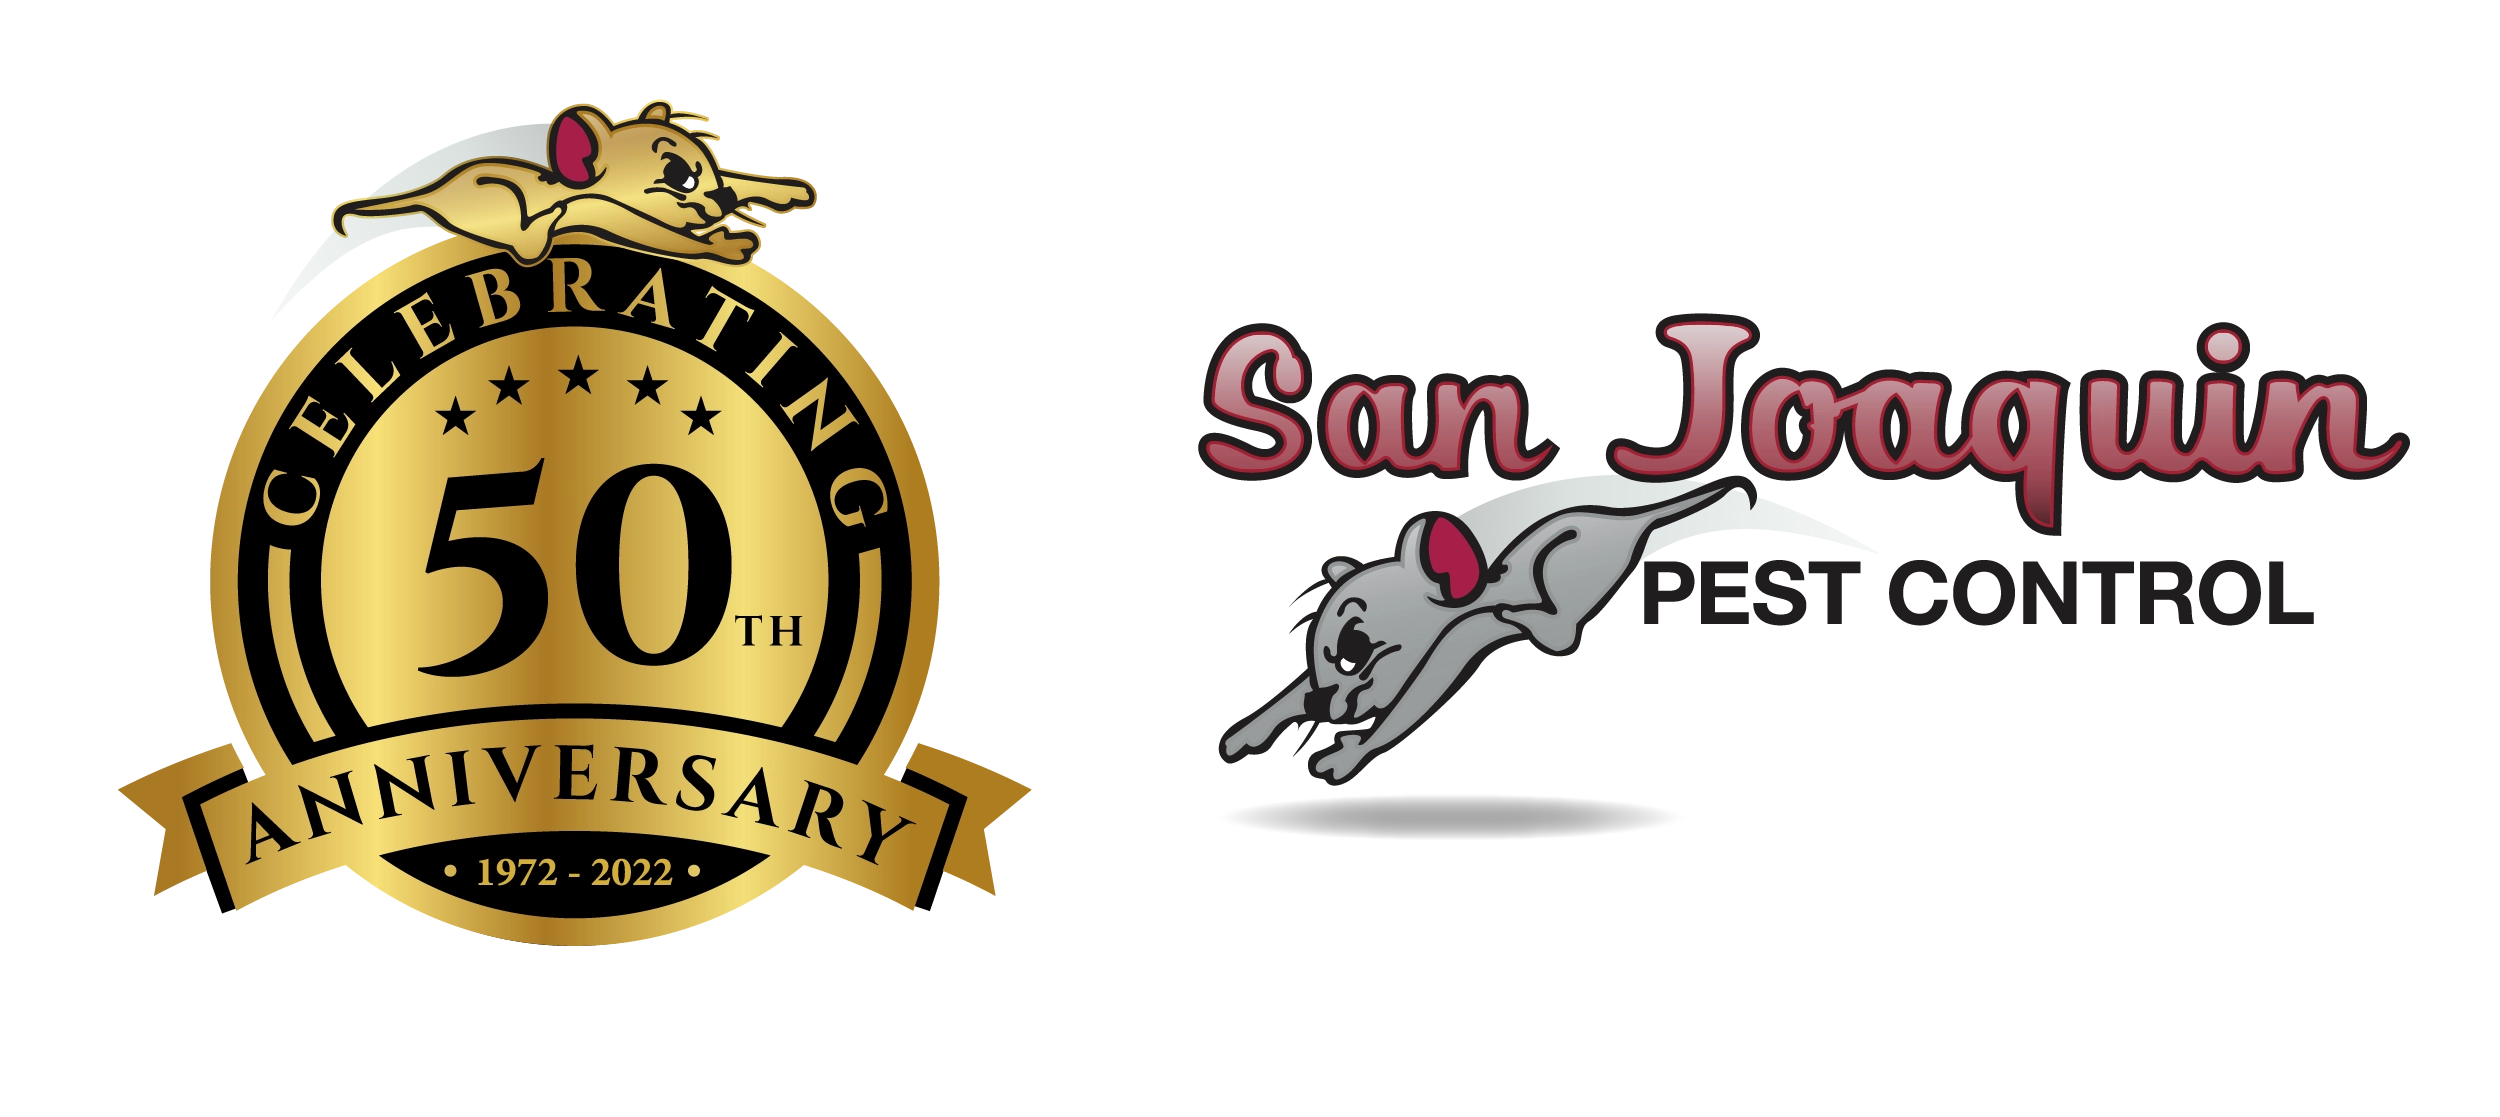 San Joaquin Pest Control of Bakersfield Logo